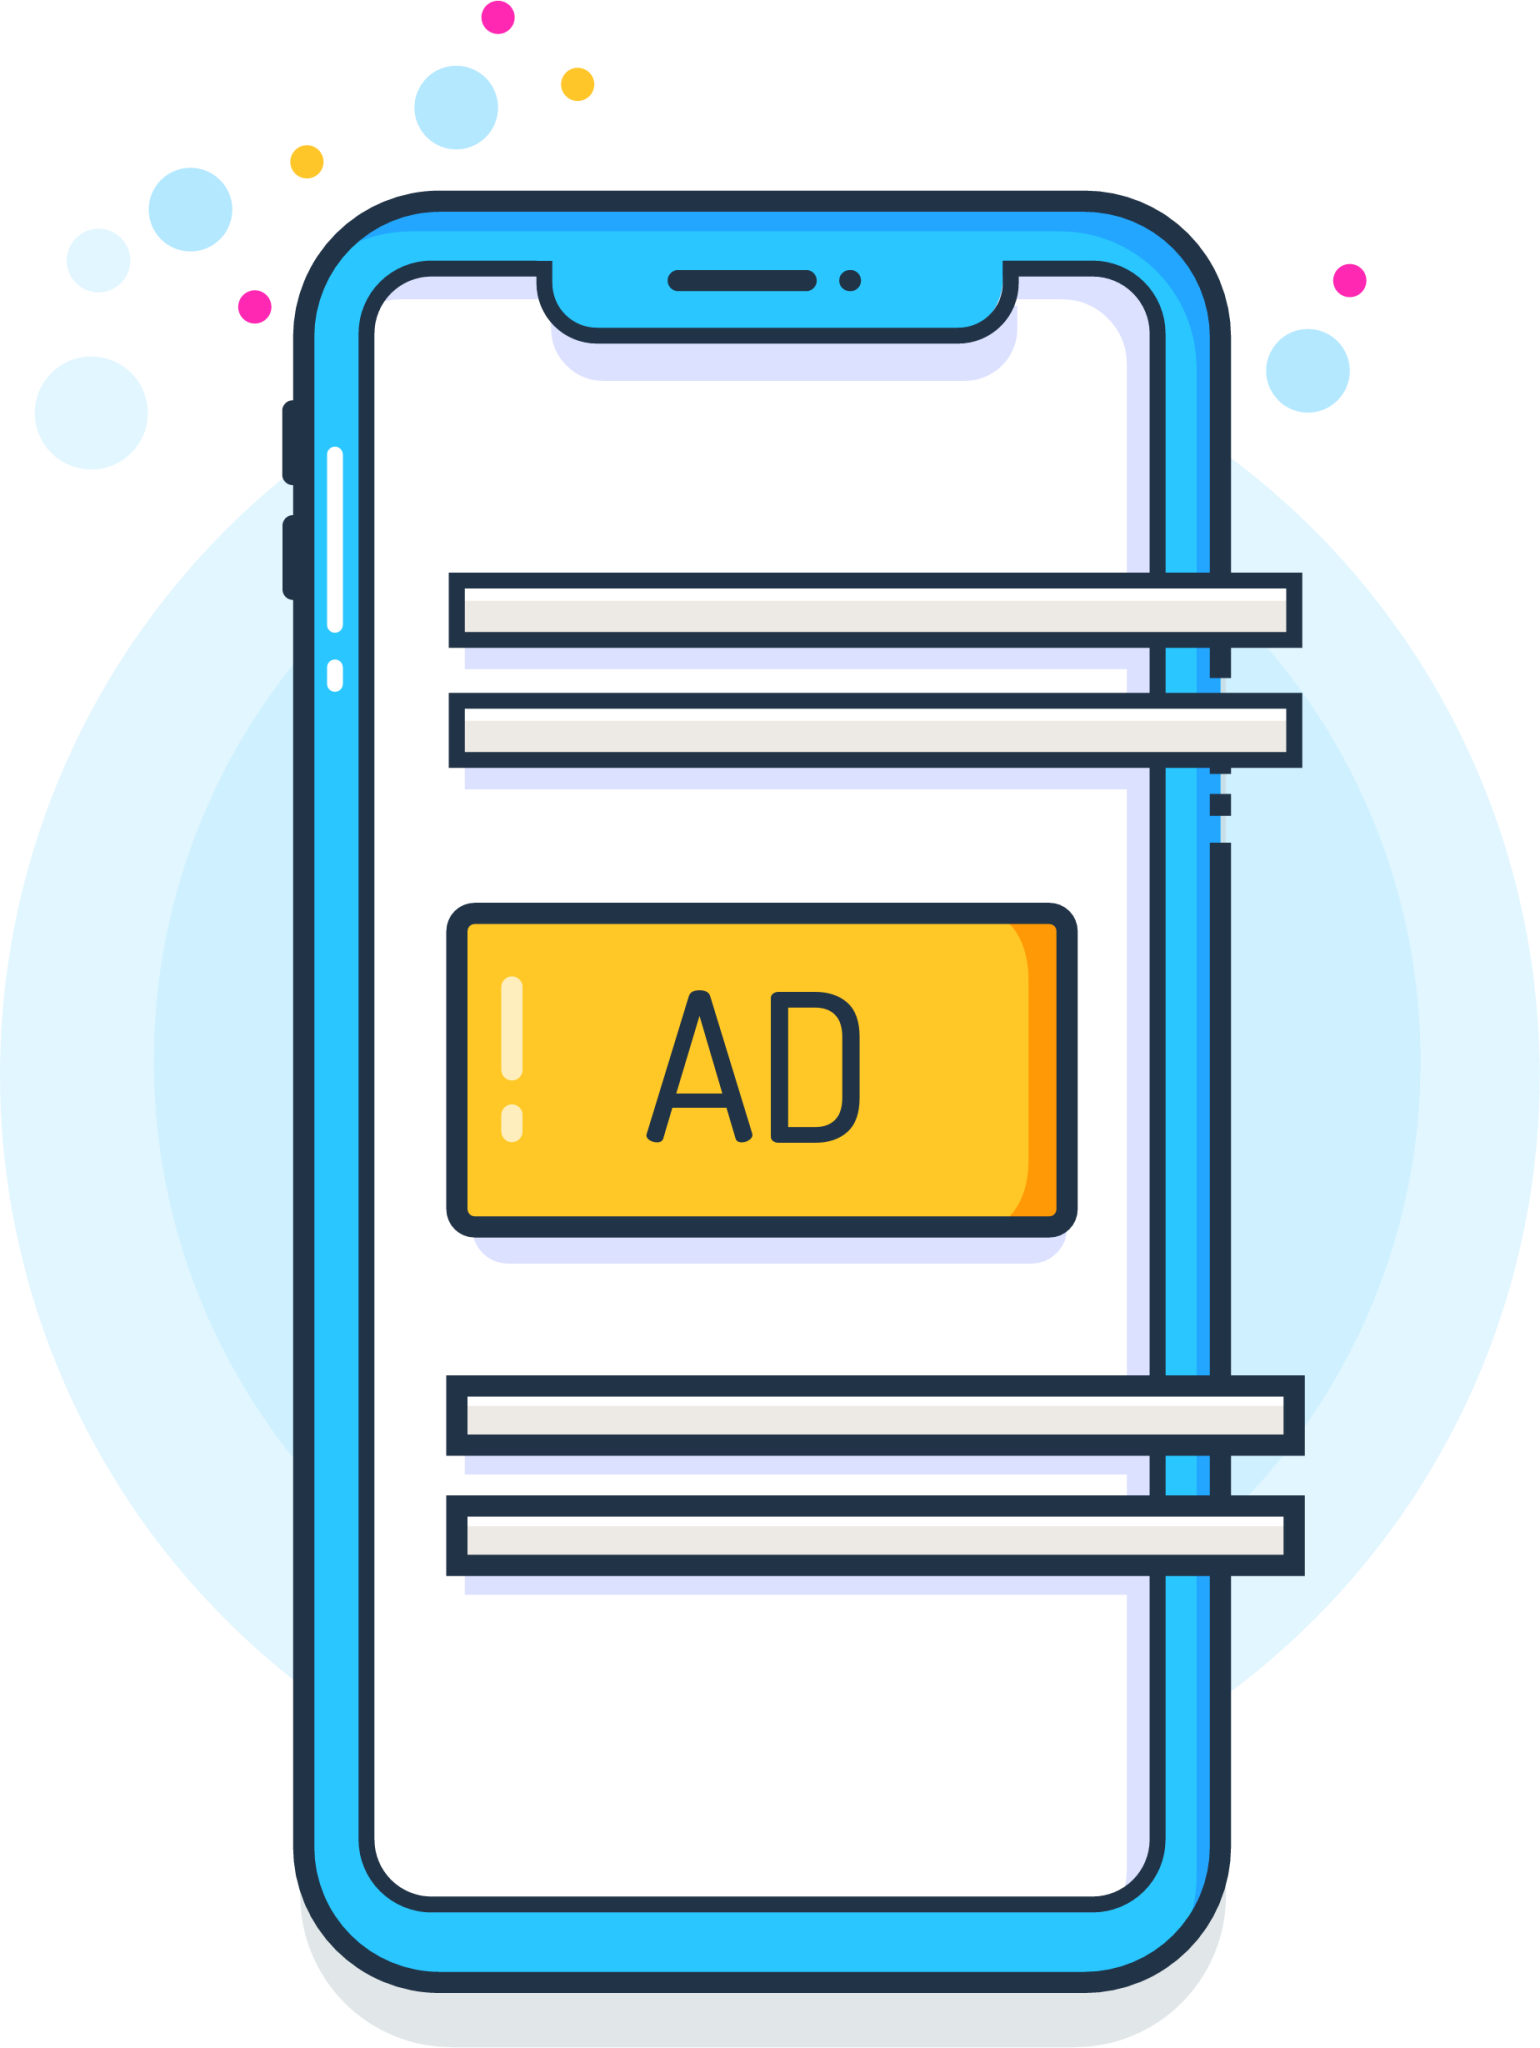 ad advertisement iphone app illustration